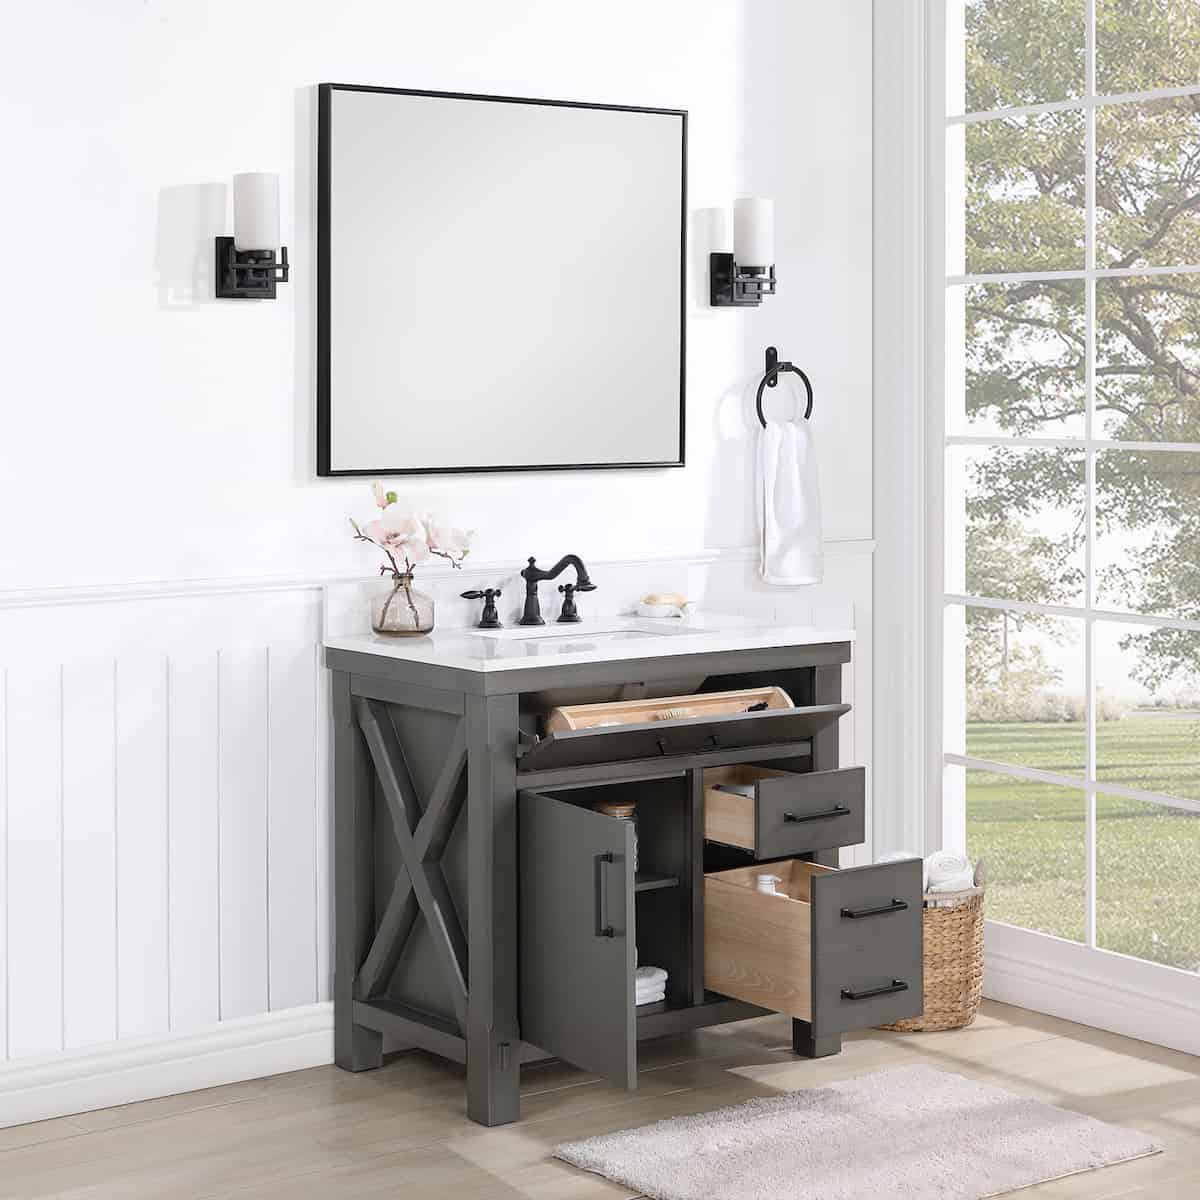 Vinnova Viella 36 Inch Freestanding Single Sink Bath Vanity in Rust Grey Finish with White Composite Countertop With Mirror Inside 701836-RU-WS